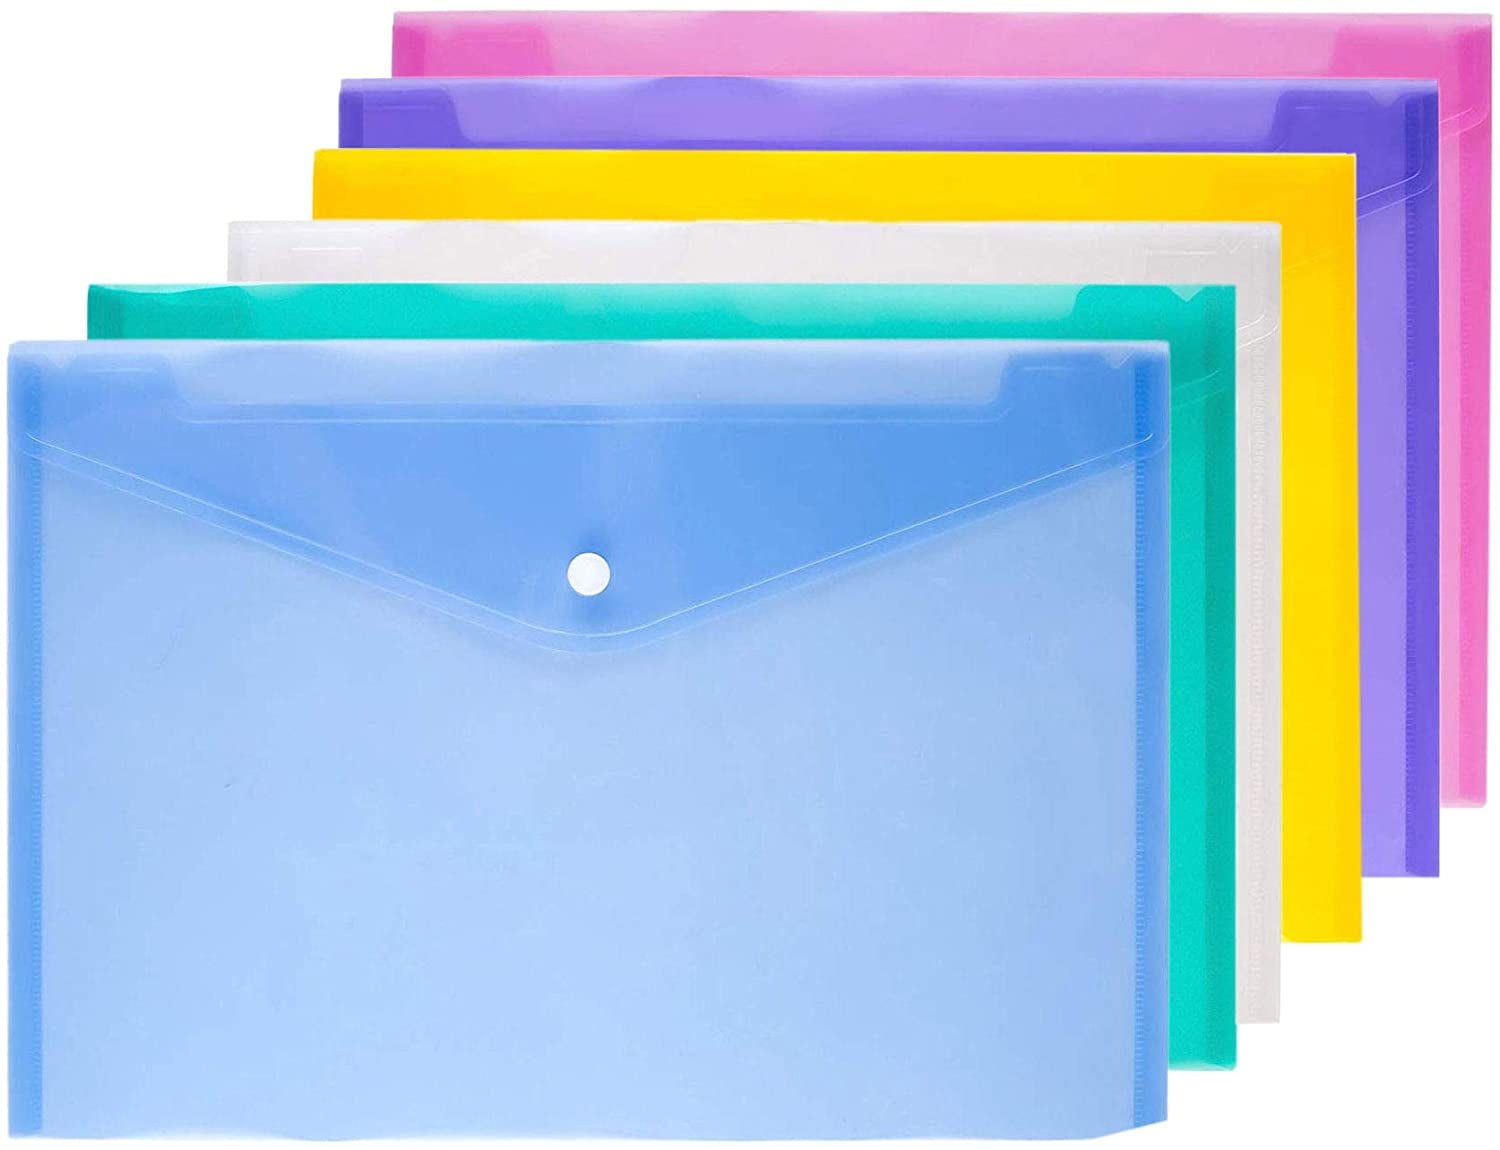 10PCS Expandable File Folders Plastic Portfolio Document Folders US Letter A4 Size File Envelopes with Label Pocket Snap Button Large Folders for Home Work Office Organization Assorted Color 